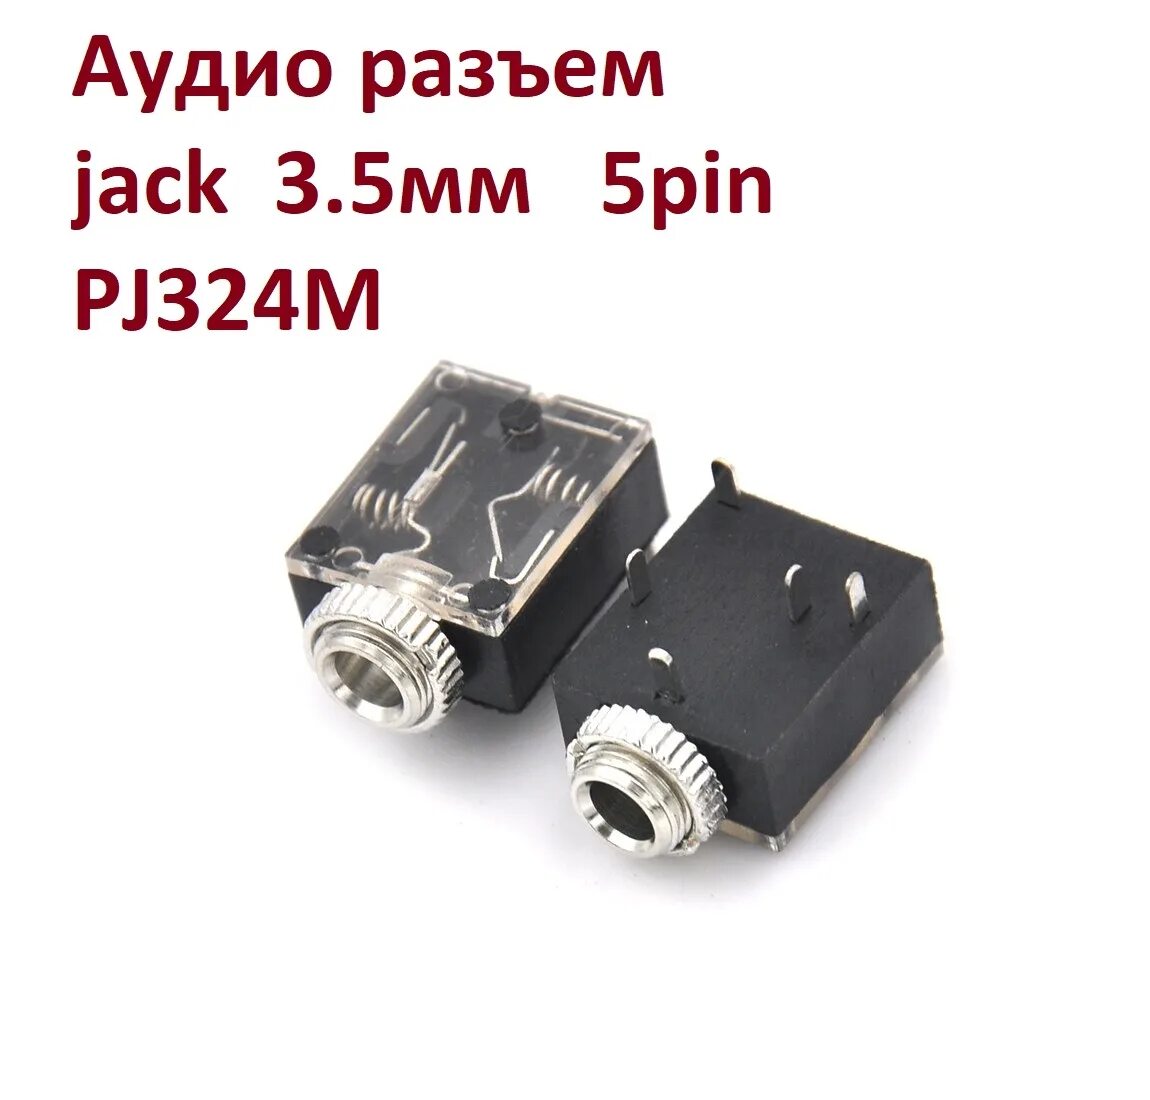 Наушники для телевизора разъем. Разъем Jack 3,5 мм, стерео,"гнездо". 3.5Mm stereo Connector. Гнездо Jack 3.5 5 Pin. 3.5 Jack гнездо разъём.